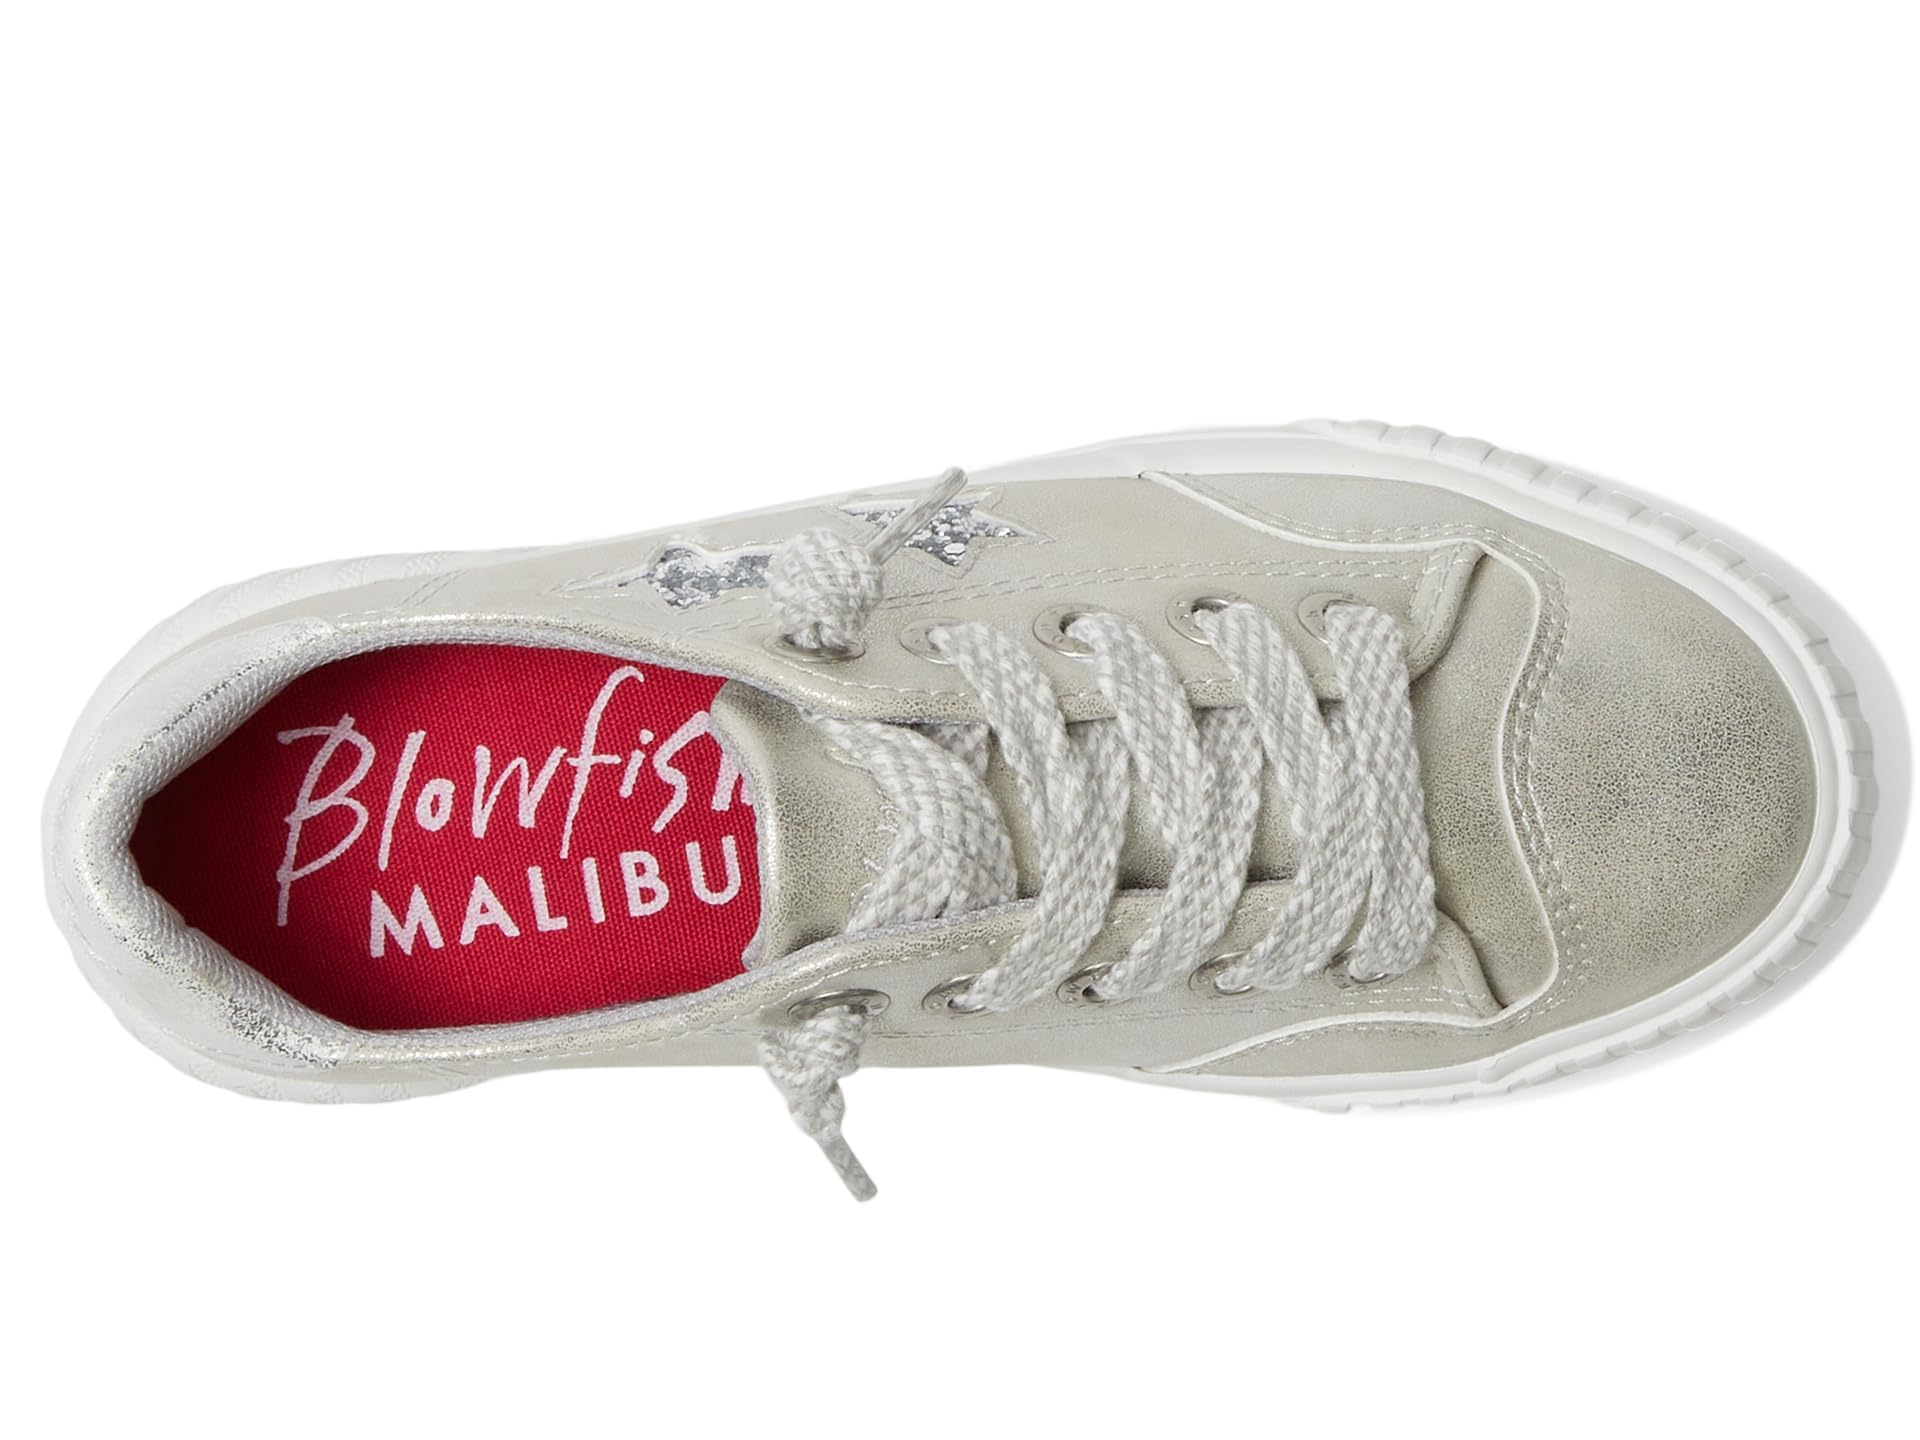 Blowfish Malibu Girl's Wander-k Sneaker